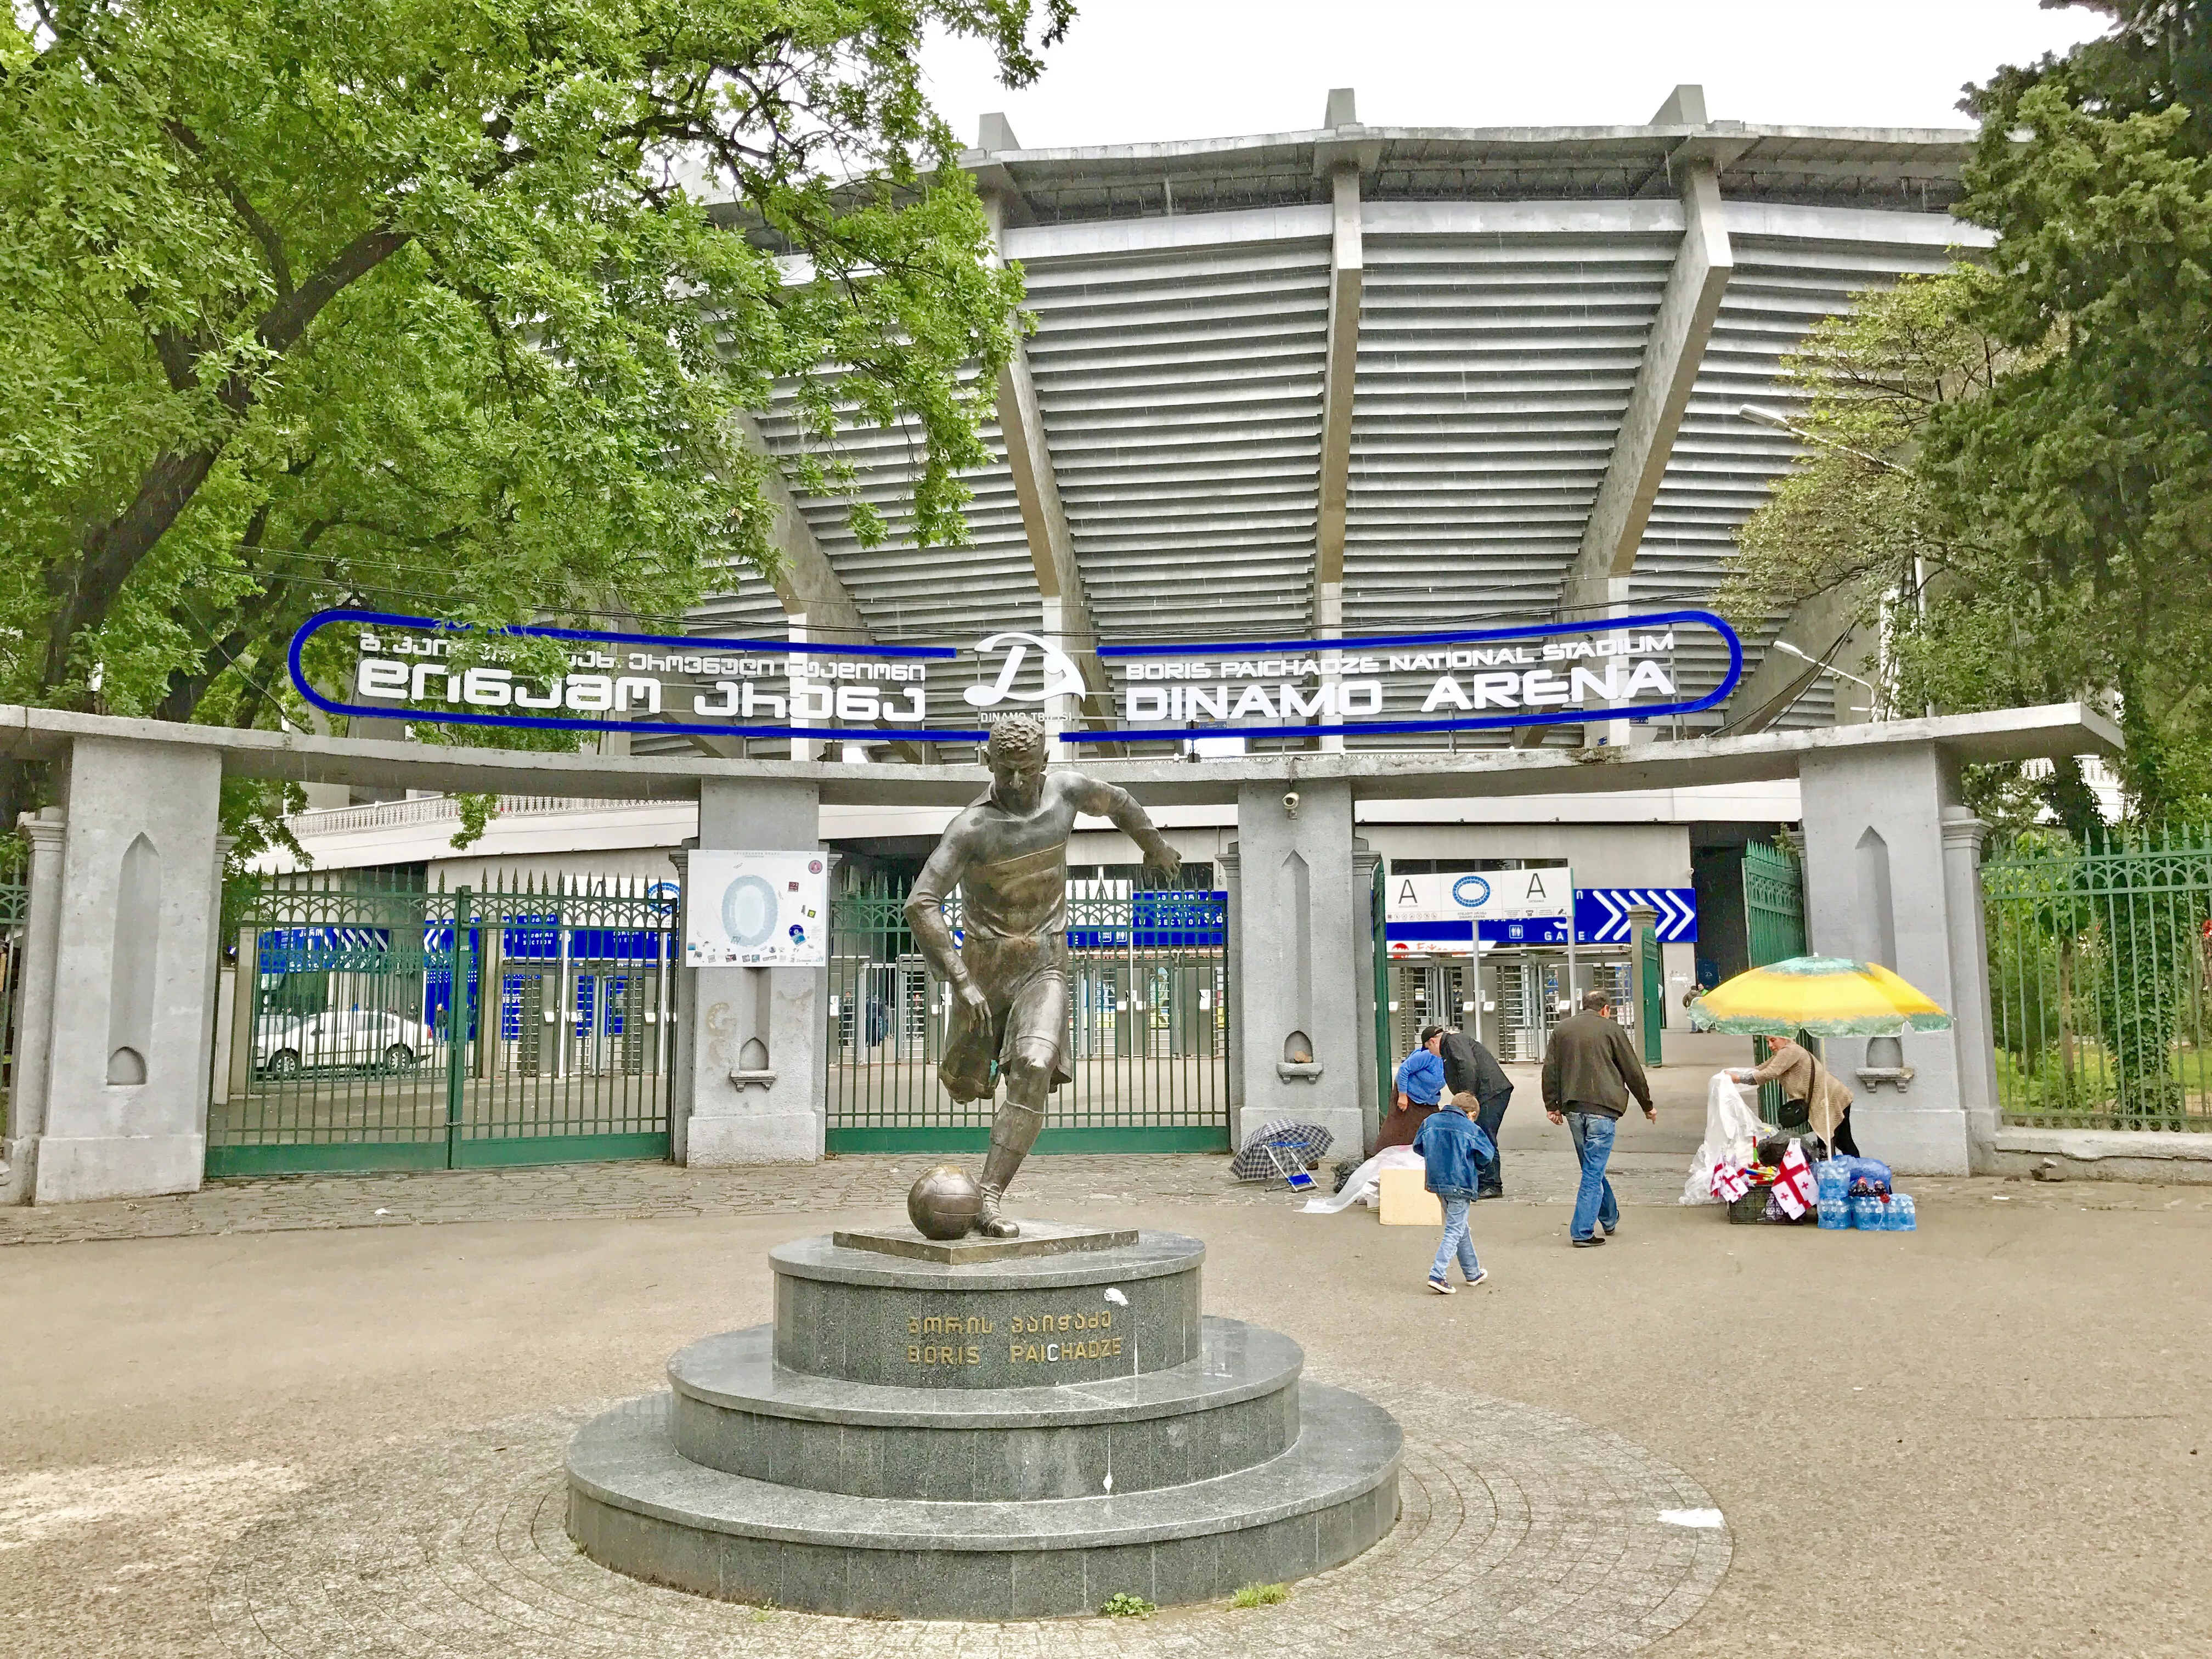 Boris Paichadze Dinamo Arena in Georgia, Europe | Football - Rated 3.9